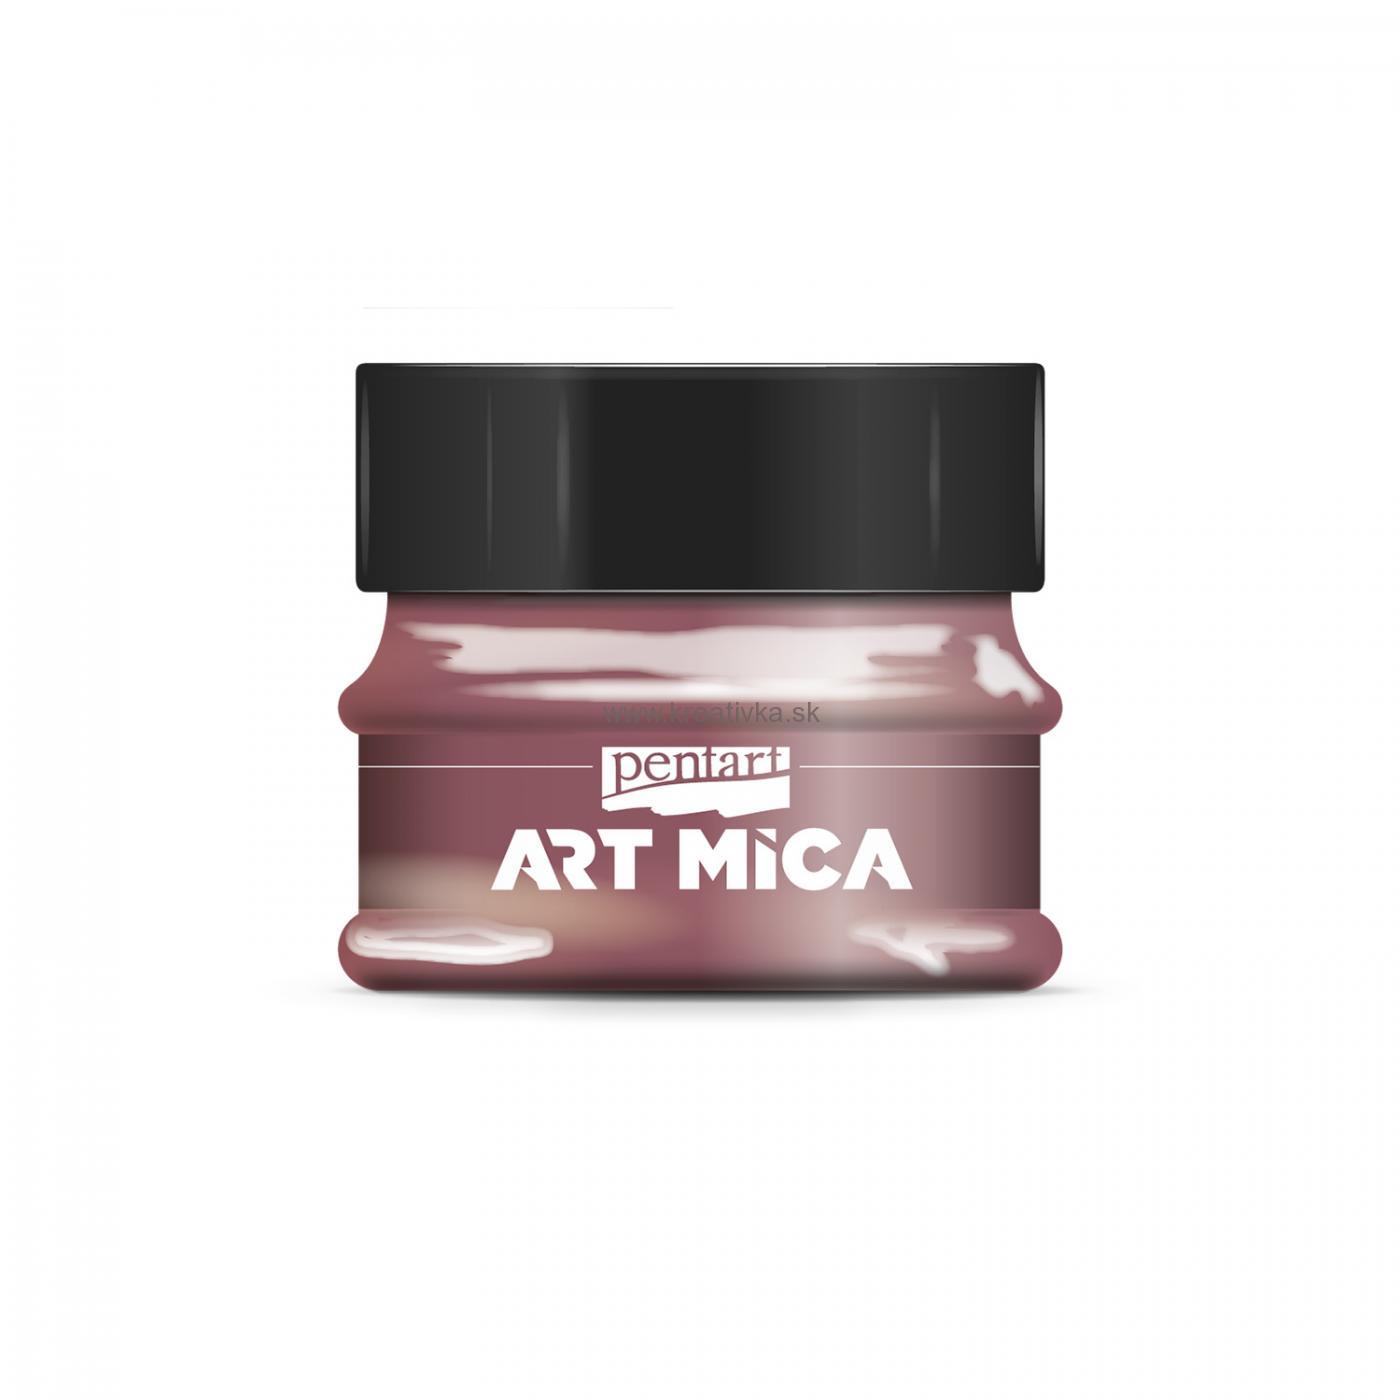 ART MICA minerálny práškový pigment, 9g, super červená